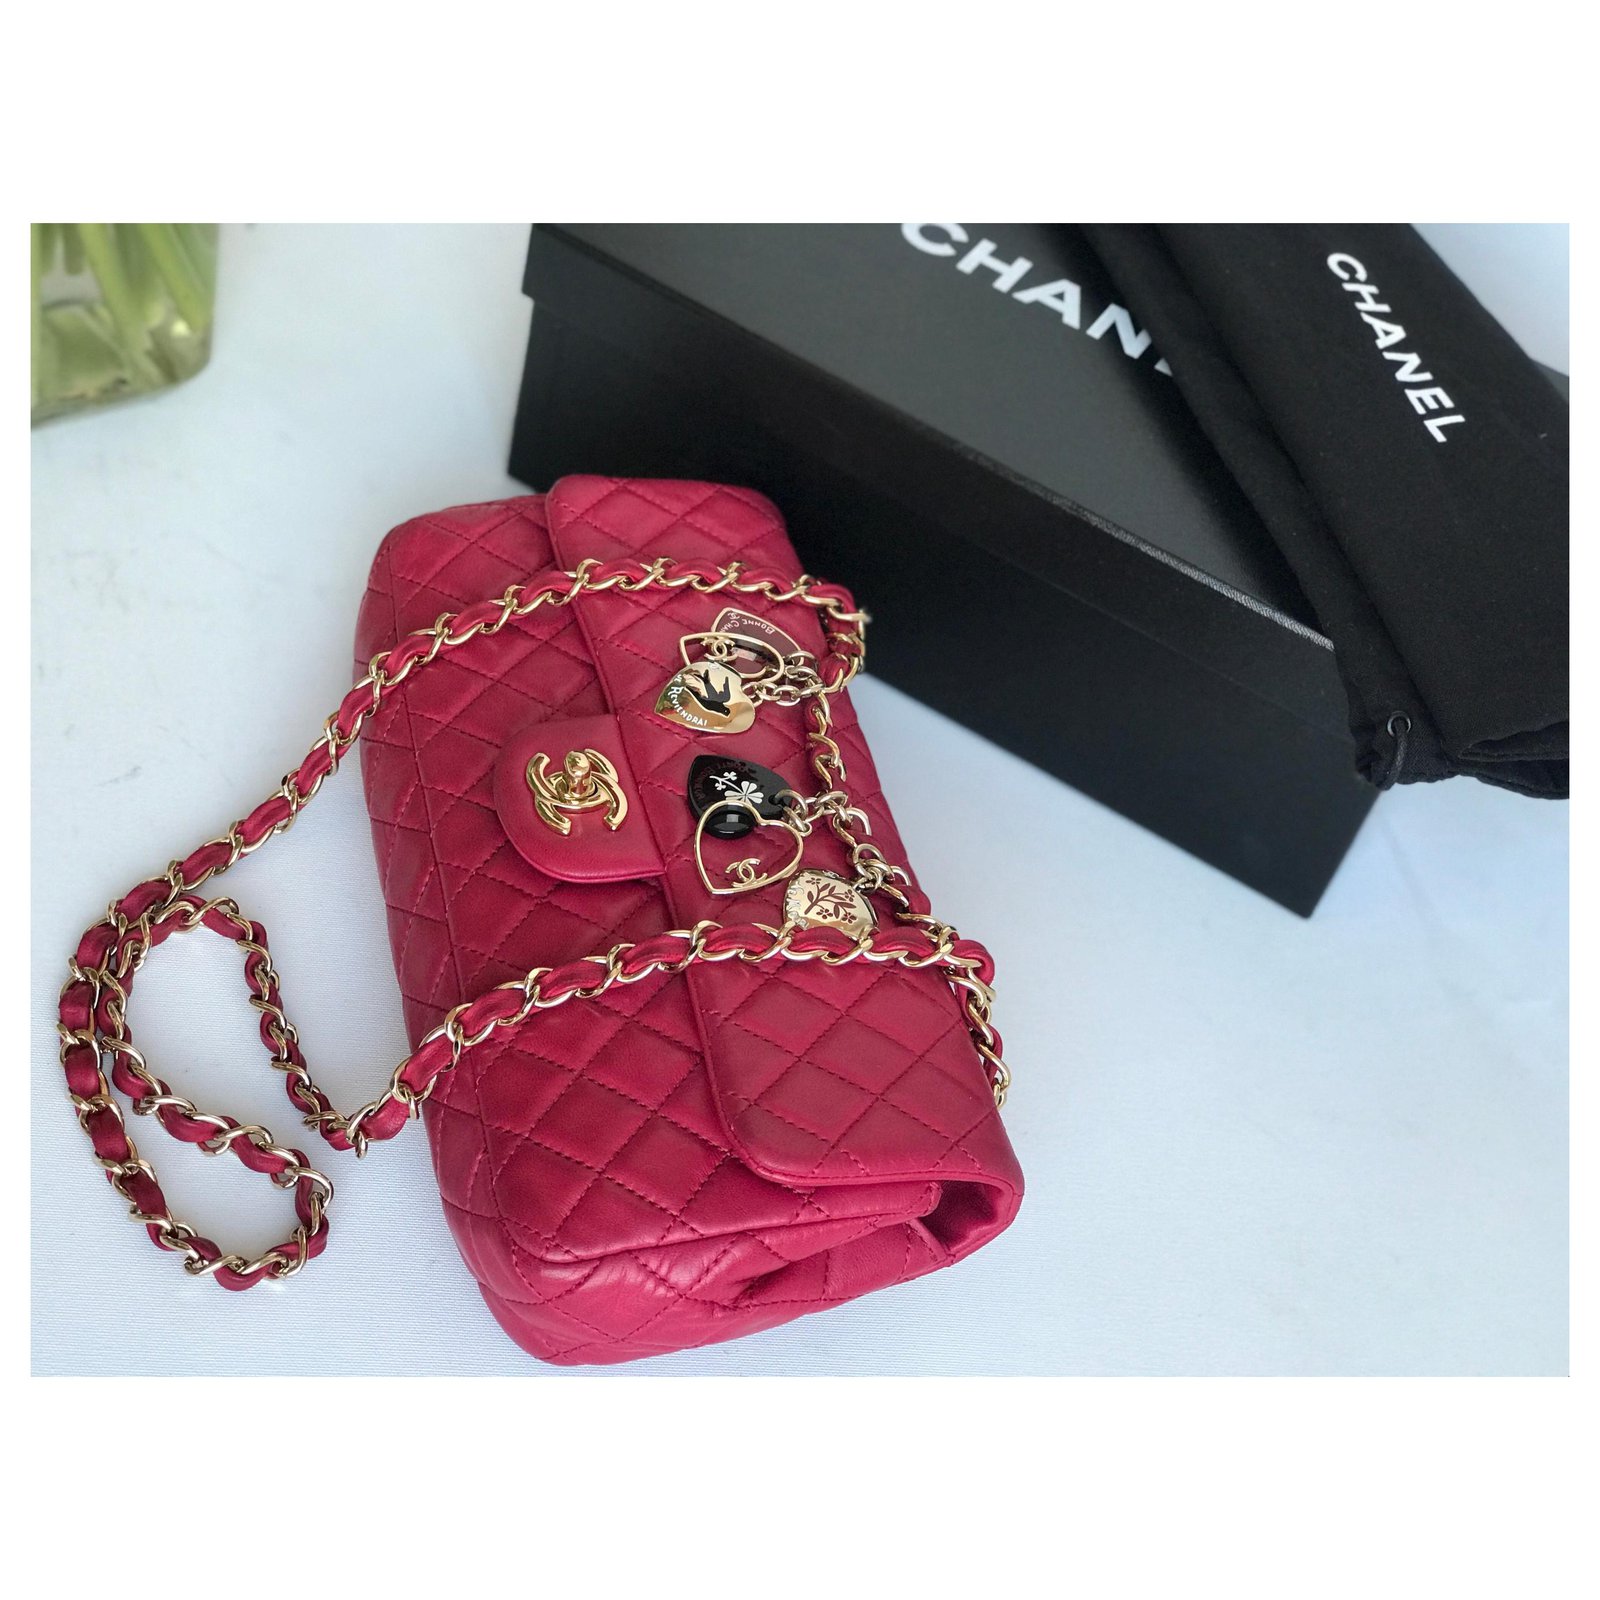 Chanel Limited Edition Valentine Charms Handbag Pink Fuschia